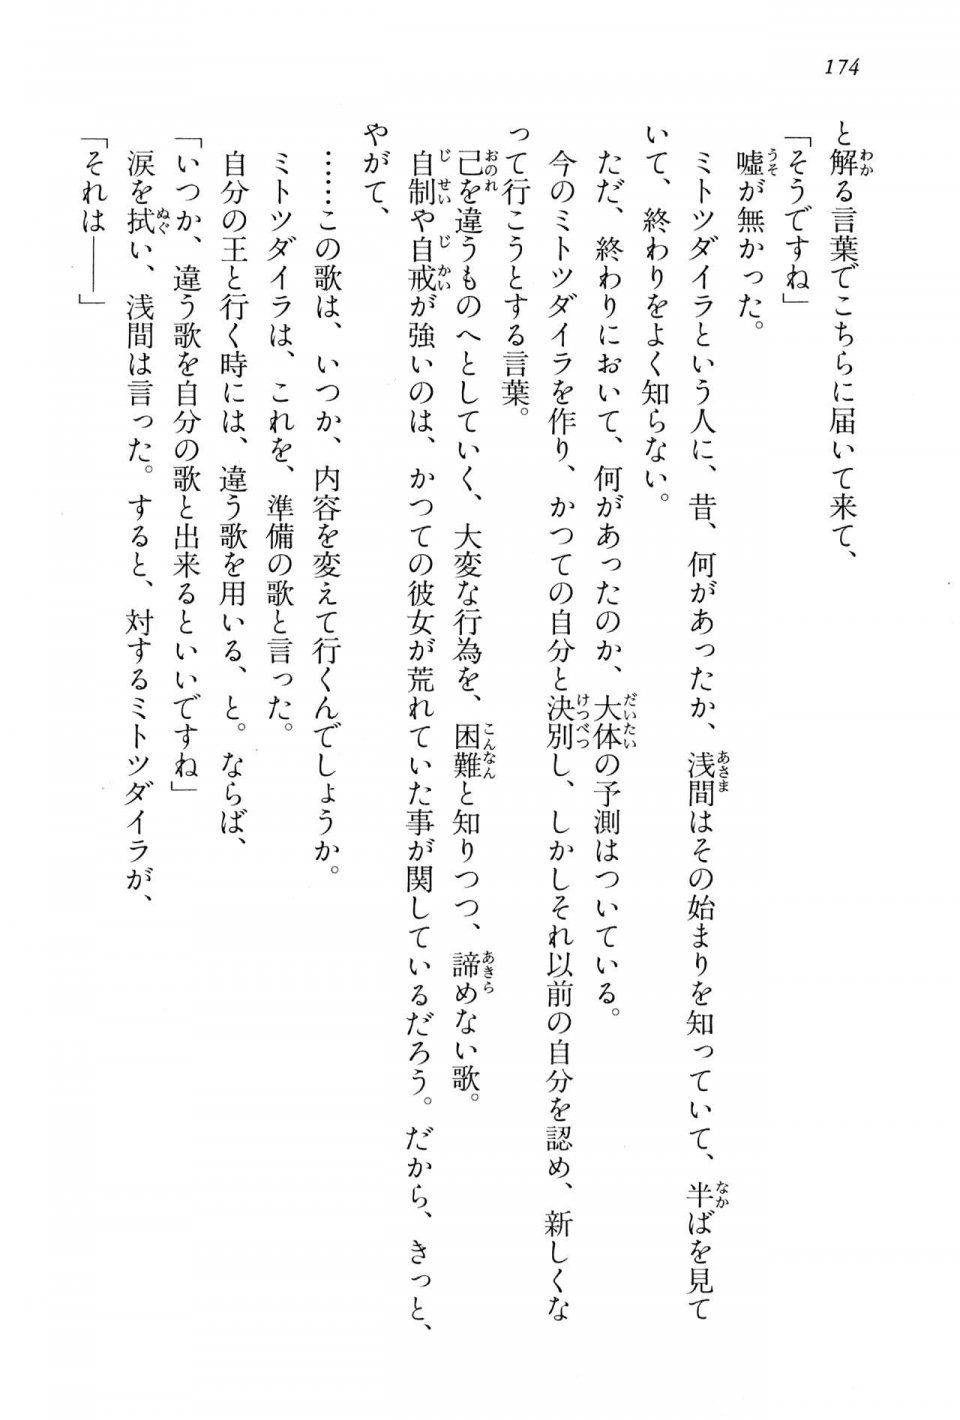 Kyoukai Senjou no Horizon BD Special Mininovel Vol 2(1B) - Photo #178